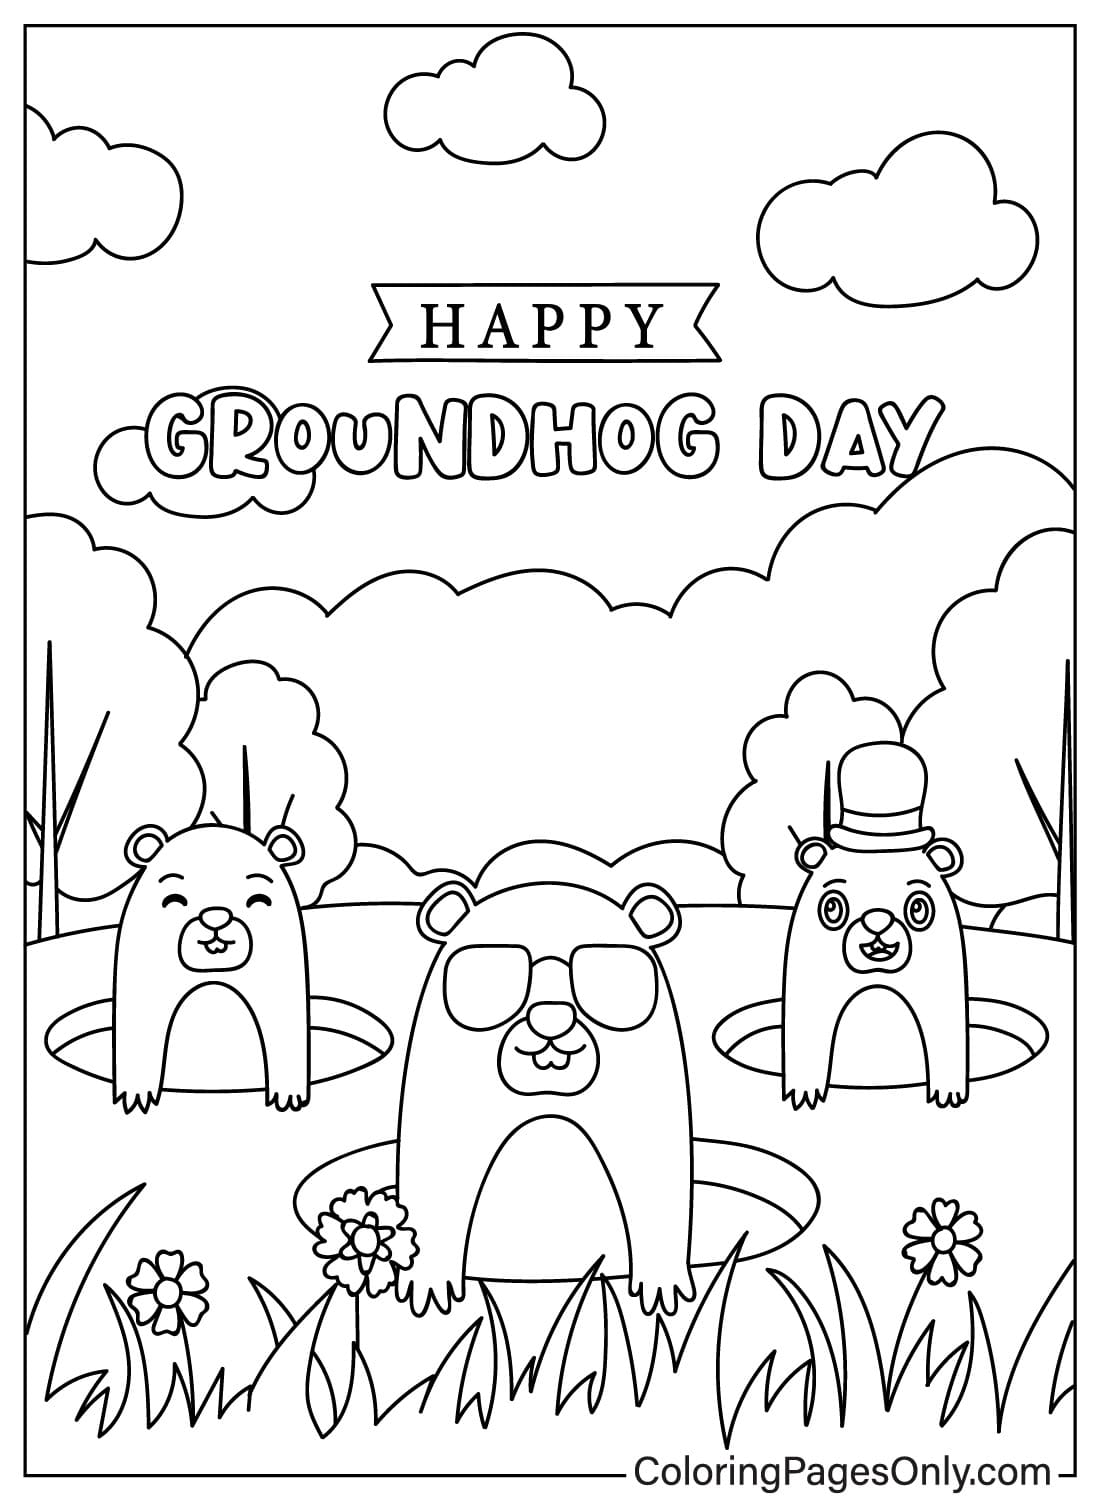 Groundhog Day kleurenpagina van Groundhog Day